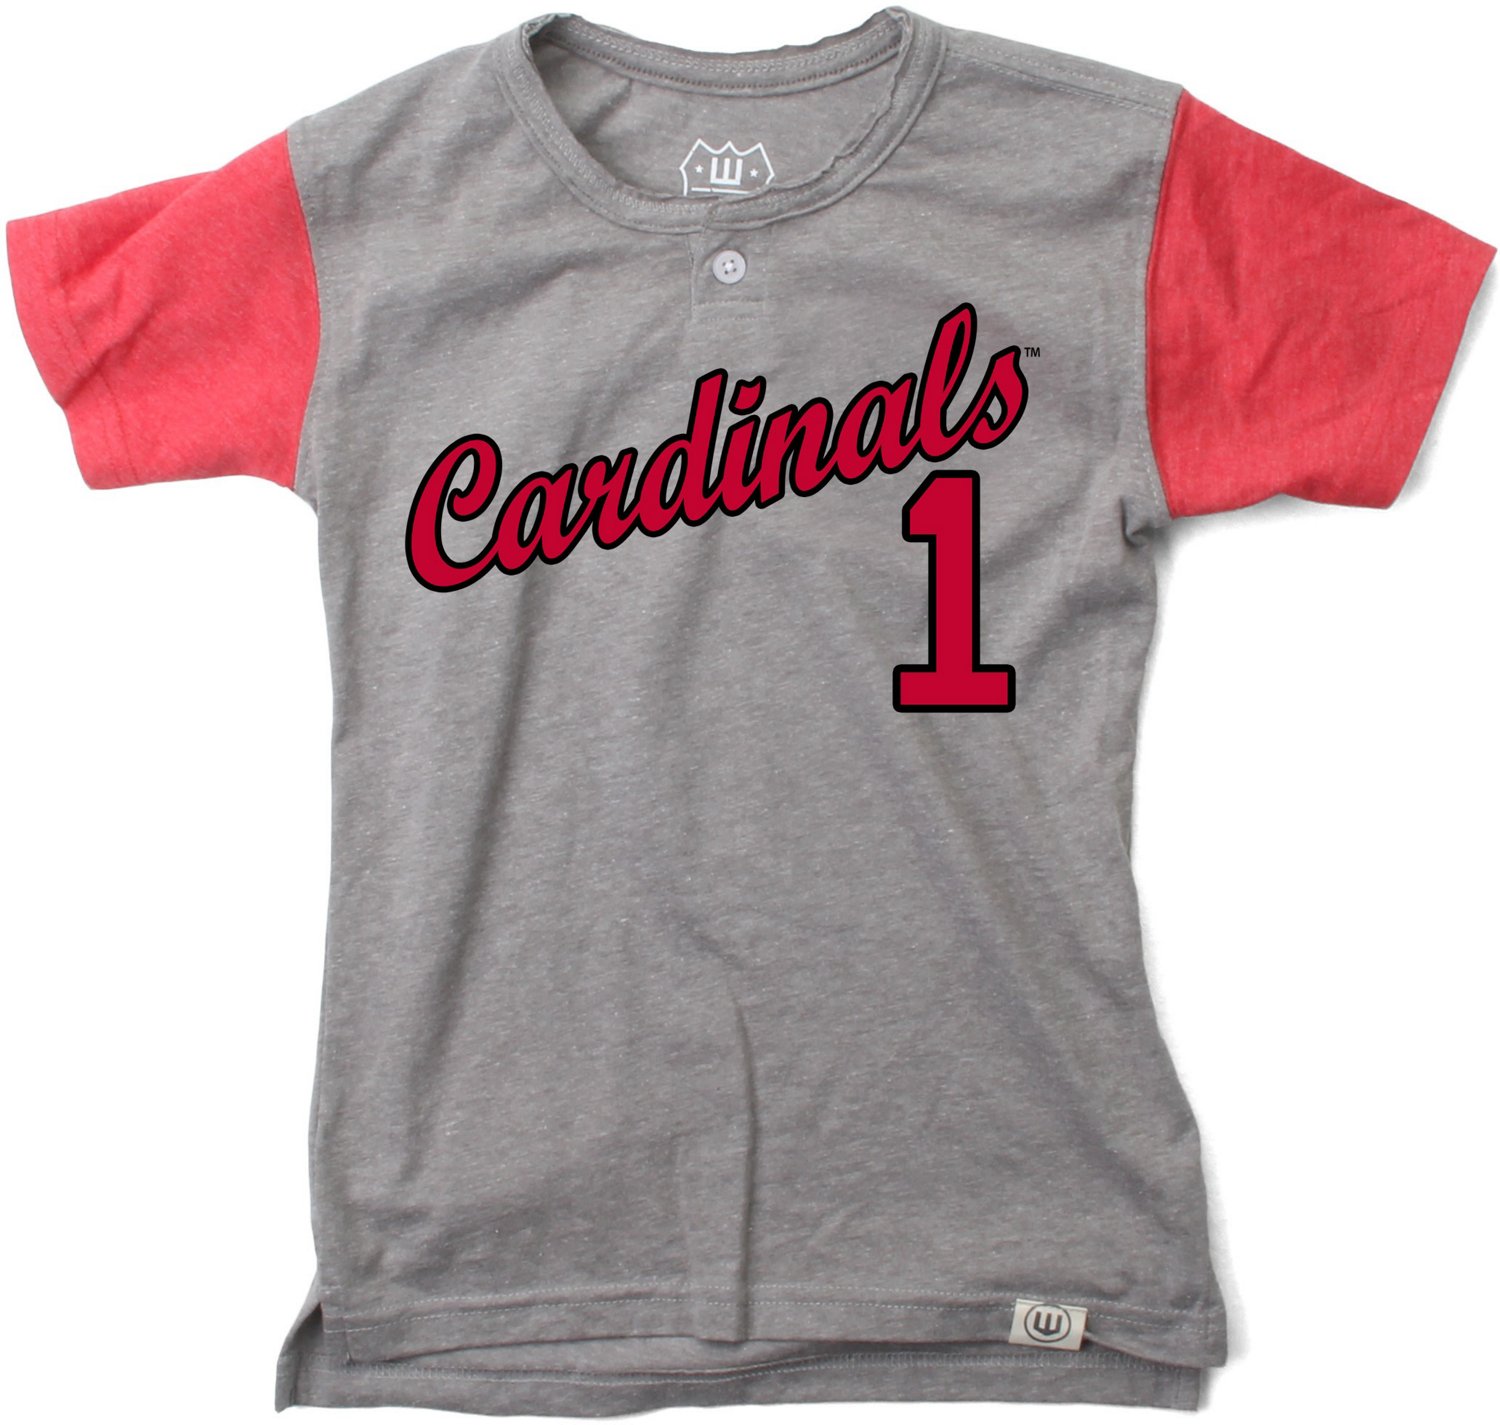 University of Louisville Youth Boy's Cardinals Short Sleeve T-Shirt